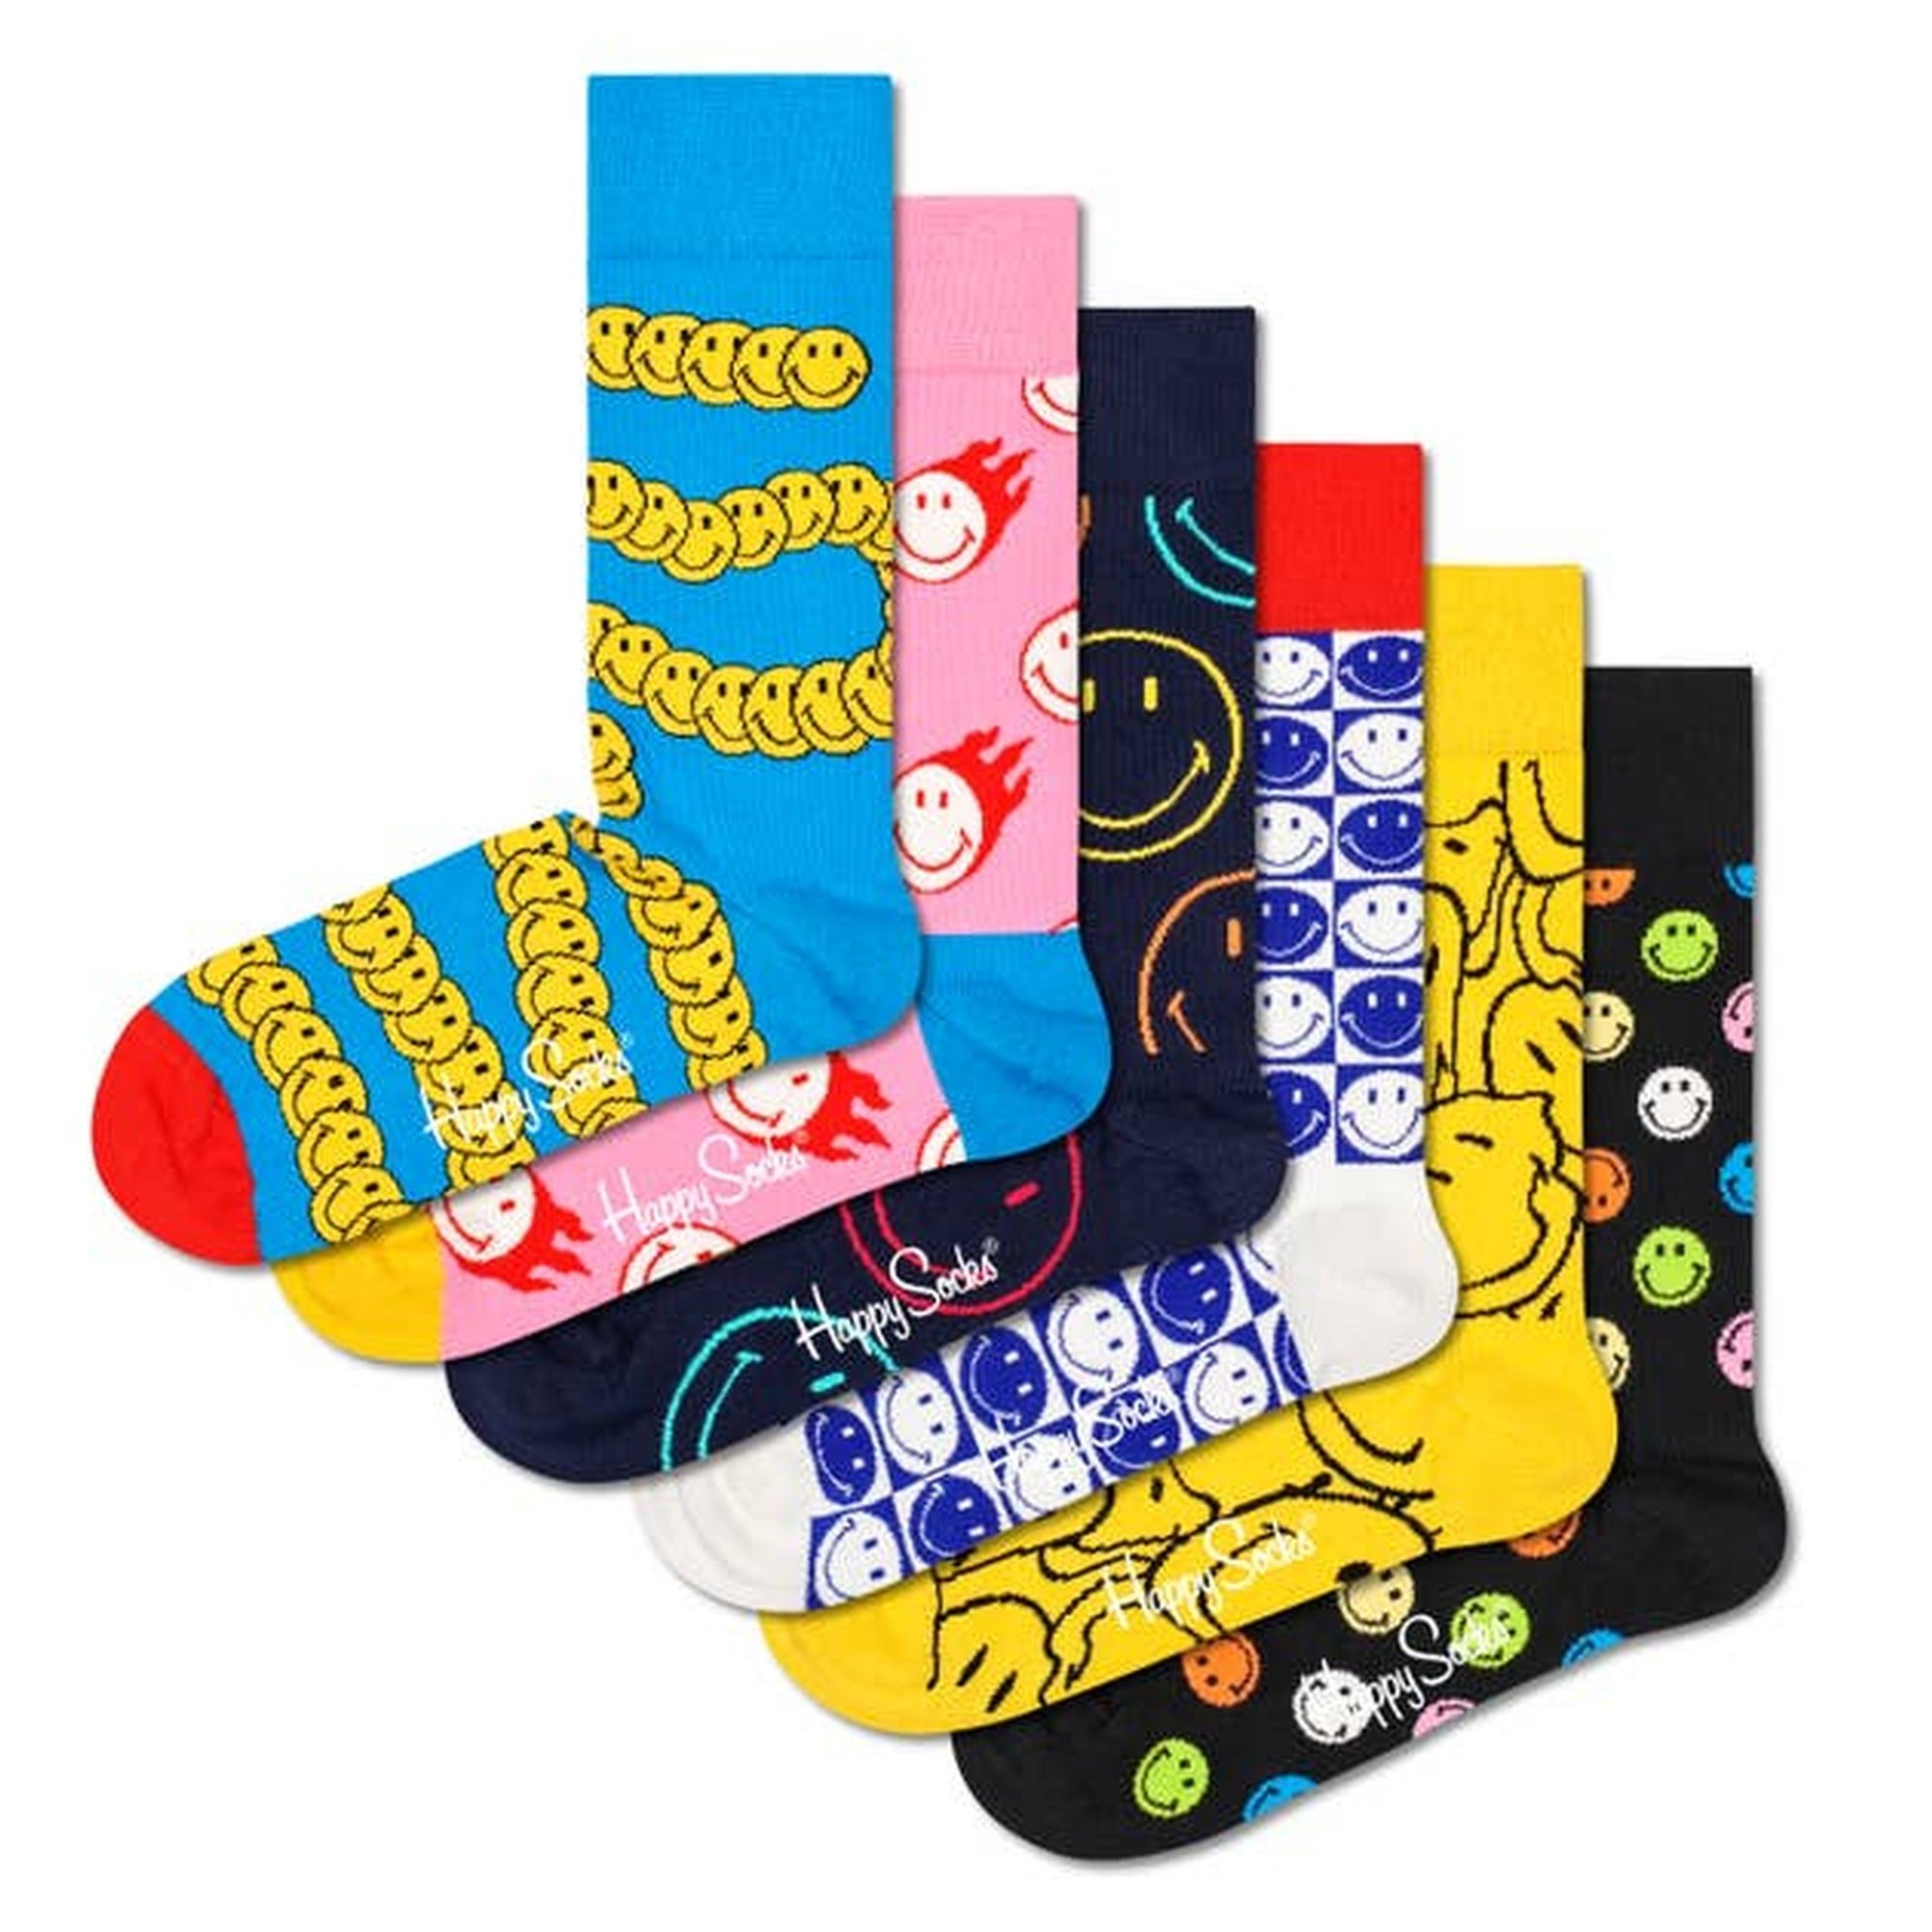 Pack 6 Pares De Calcetines Happy Socks Smiley Gift Set - multicolor - 